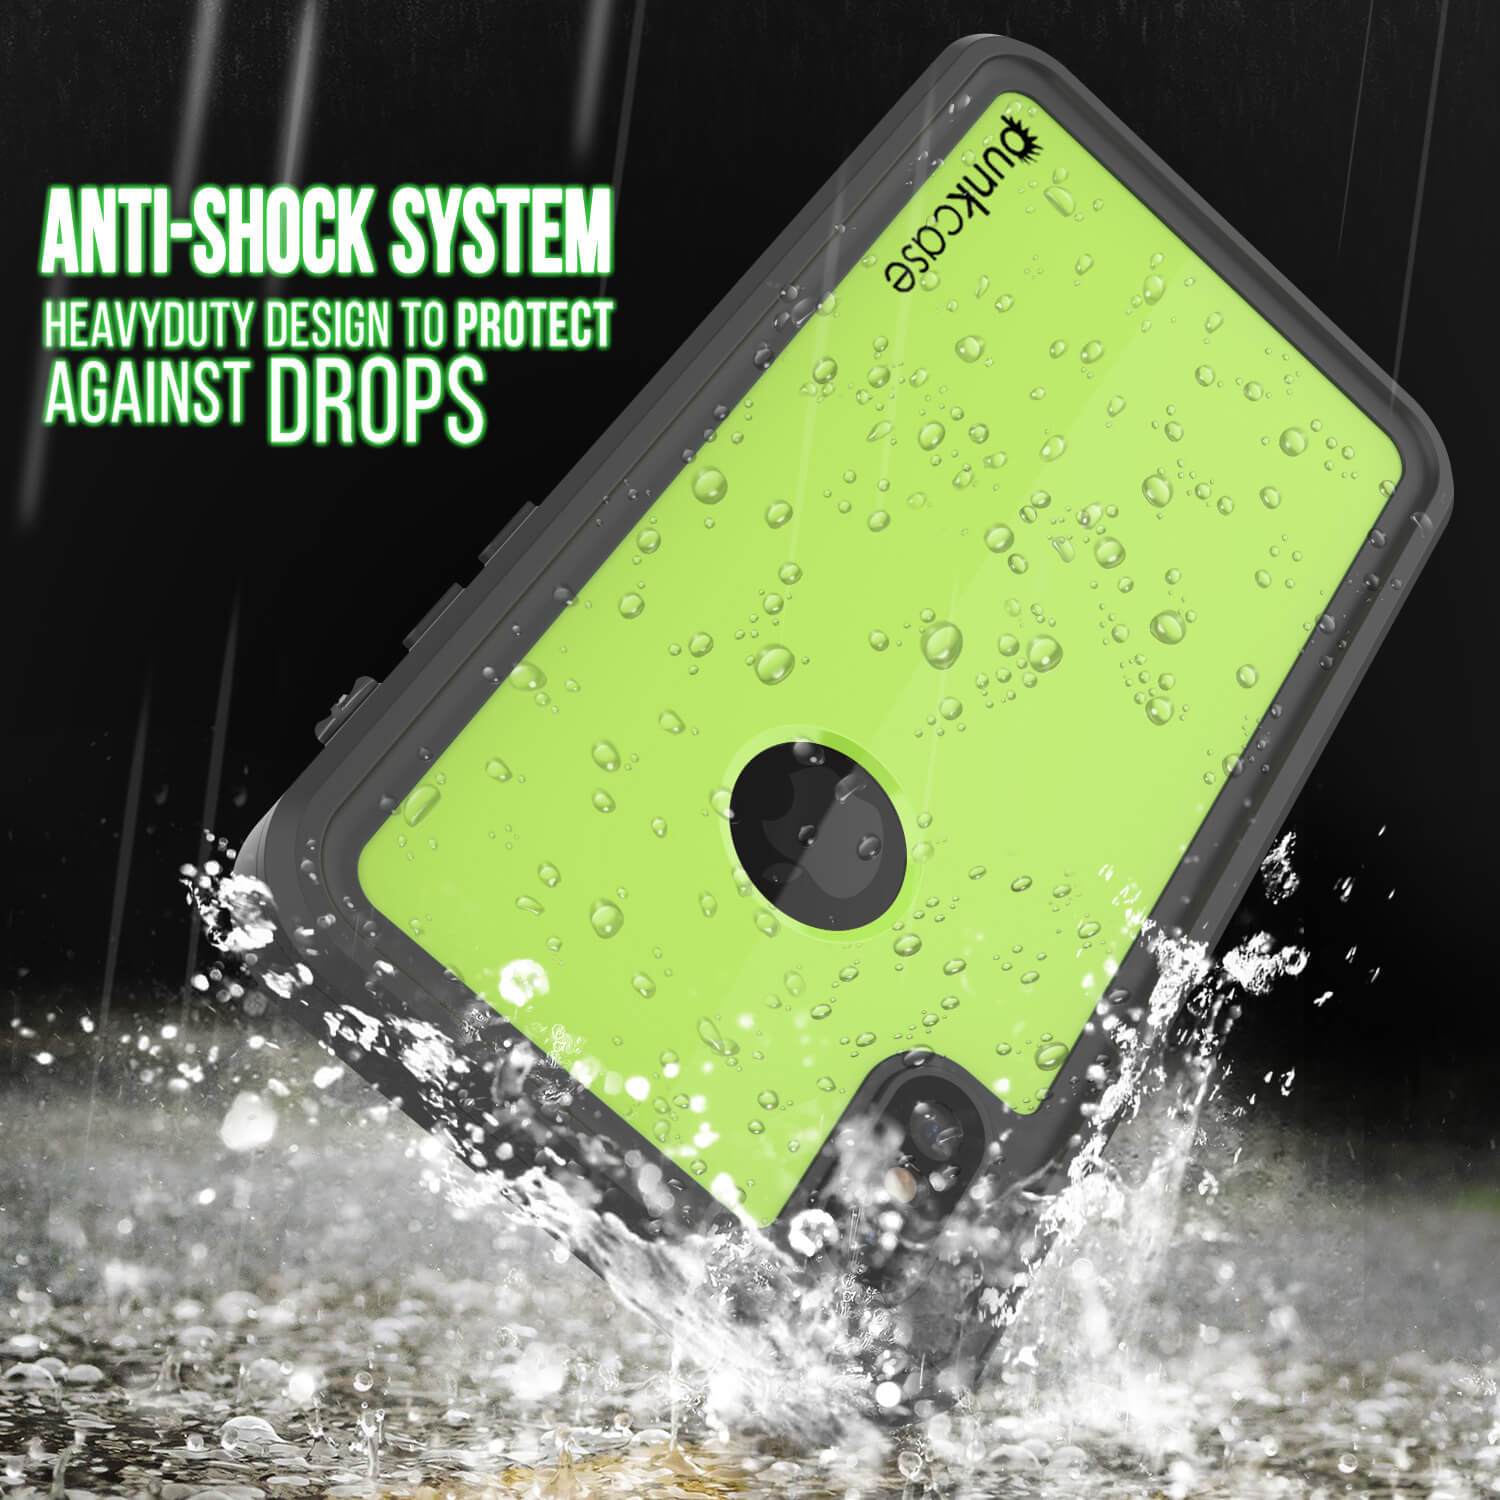 iPhone XS Waterproof IP68 Case, Punkcase [Light green] [StudStar Series] [Slim Fit] [Dirtproof]